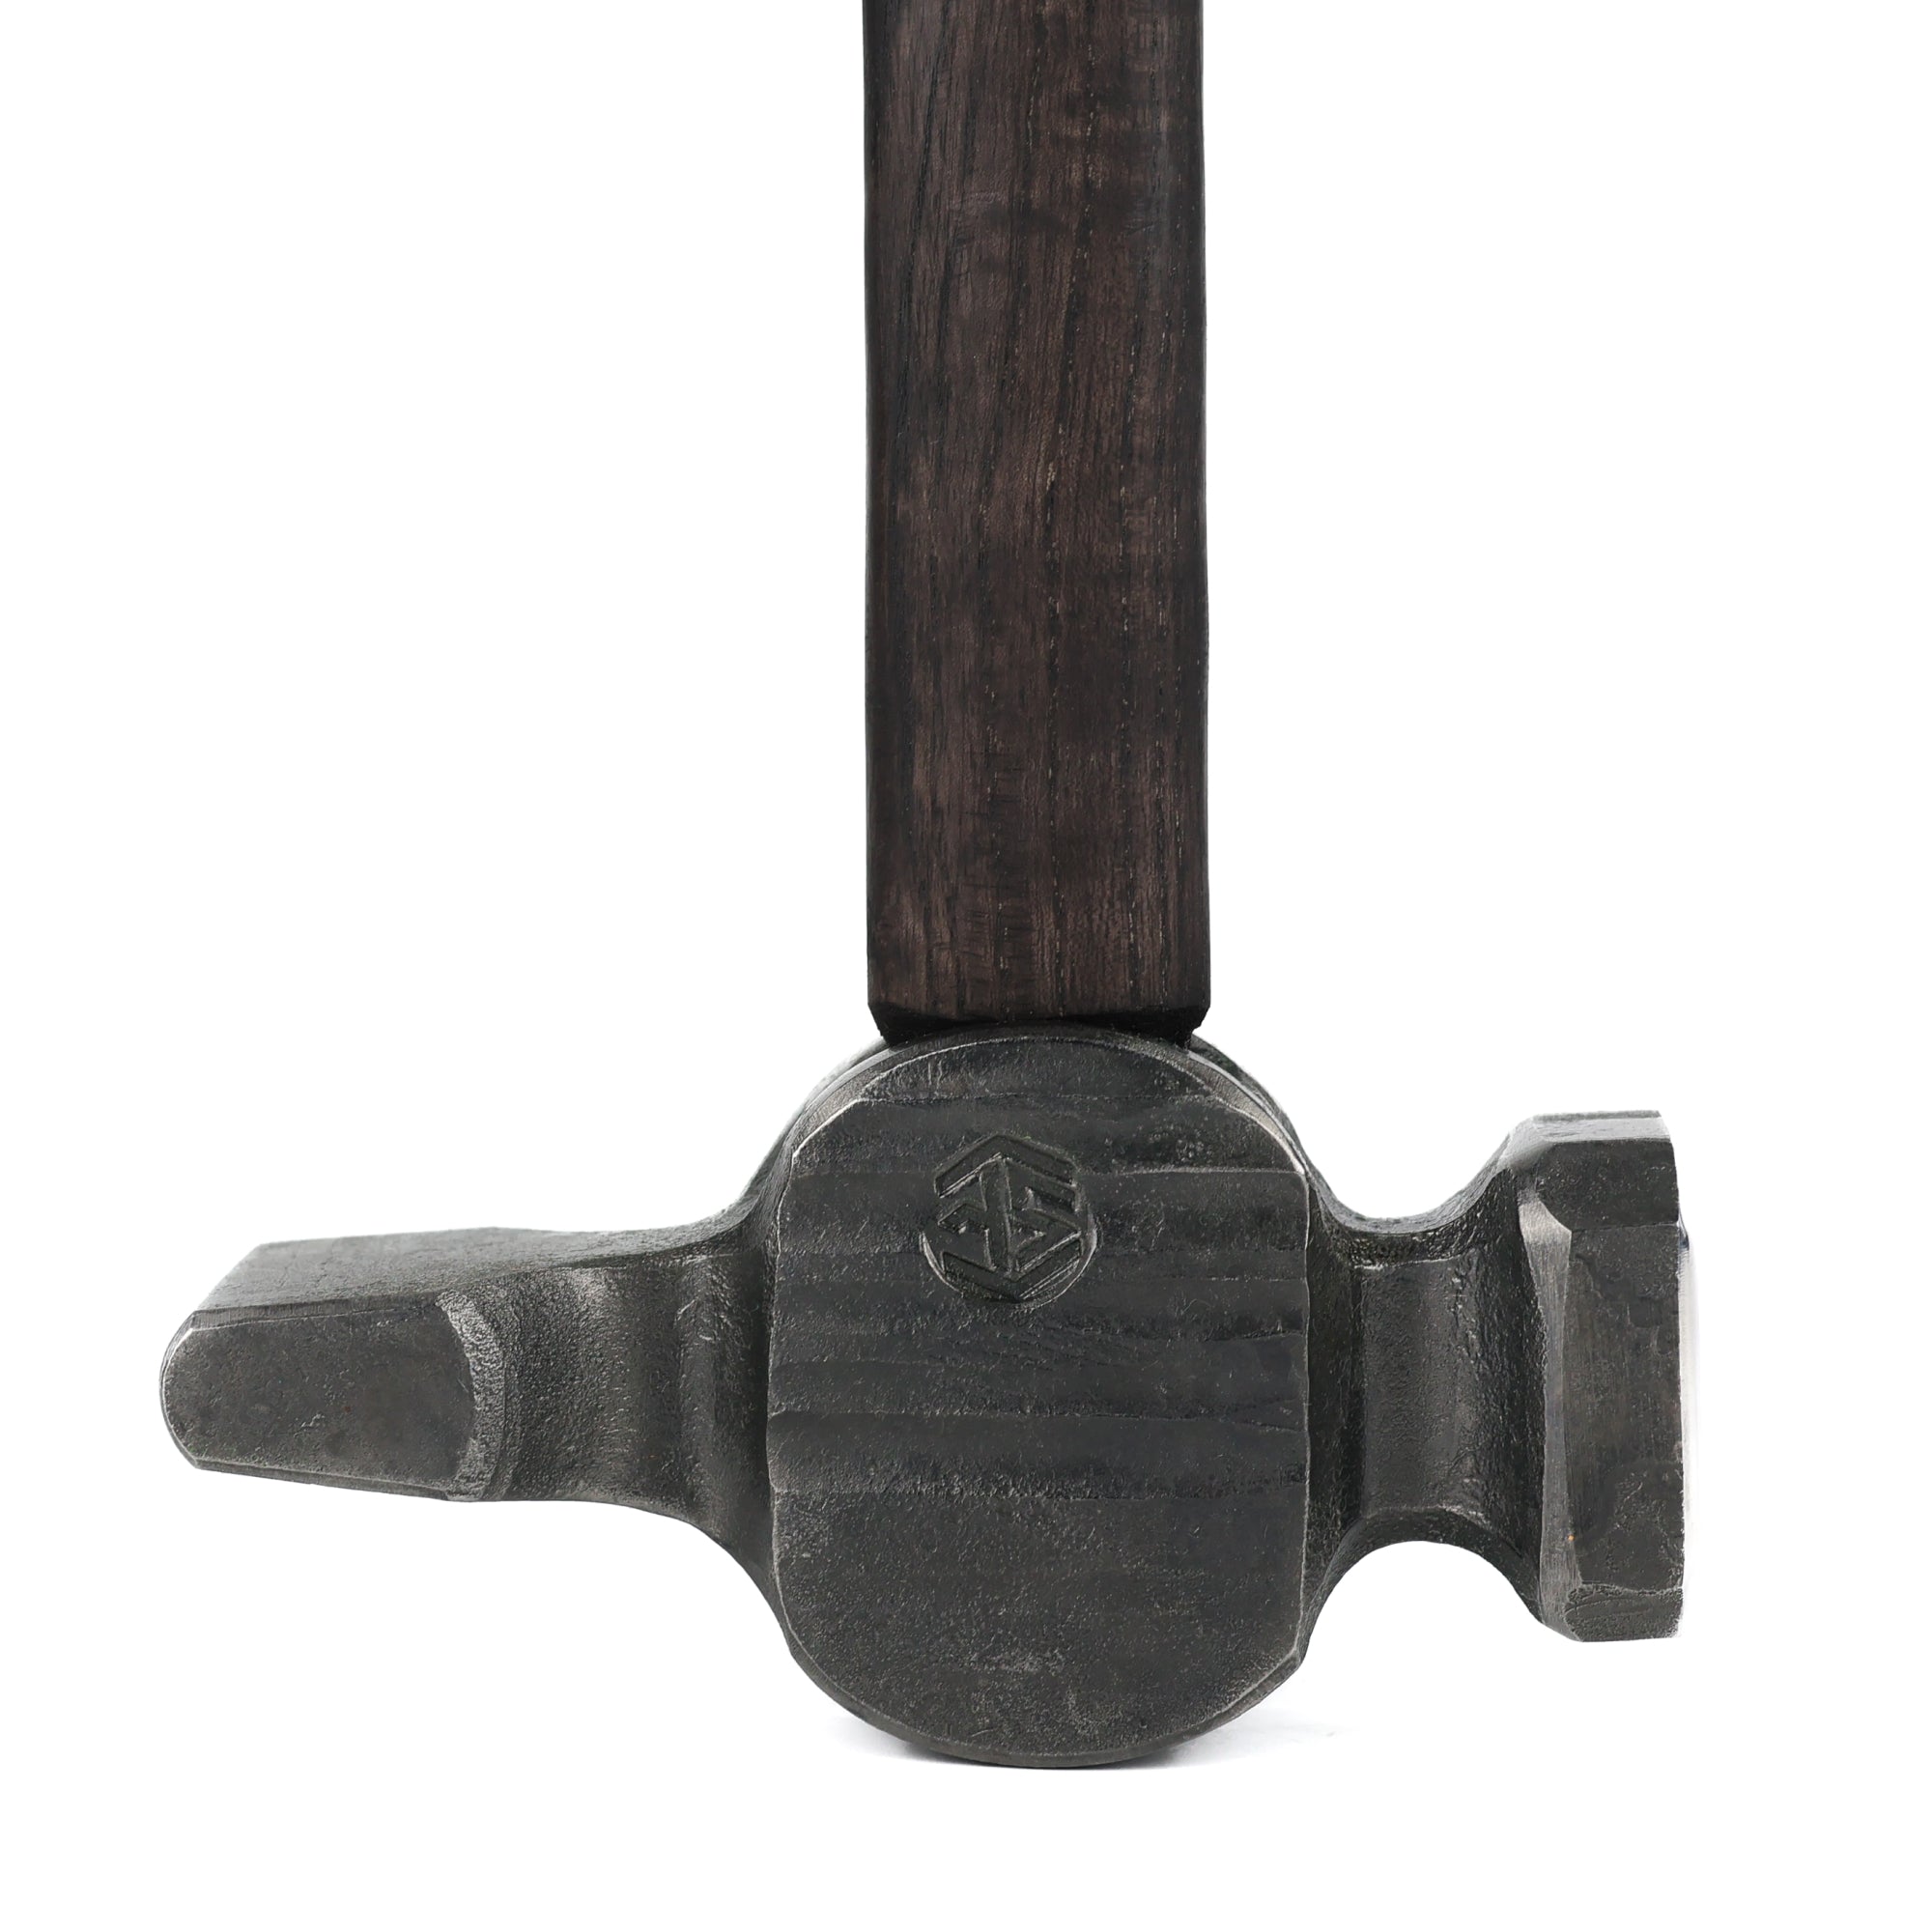 Straight Peen Hammer for blacksmith masters